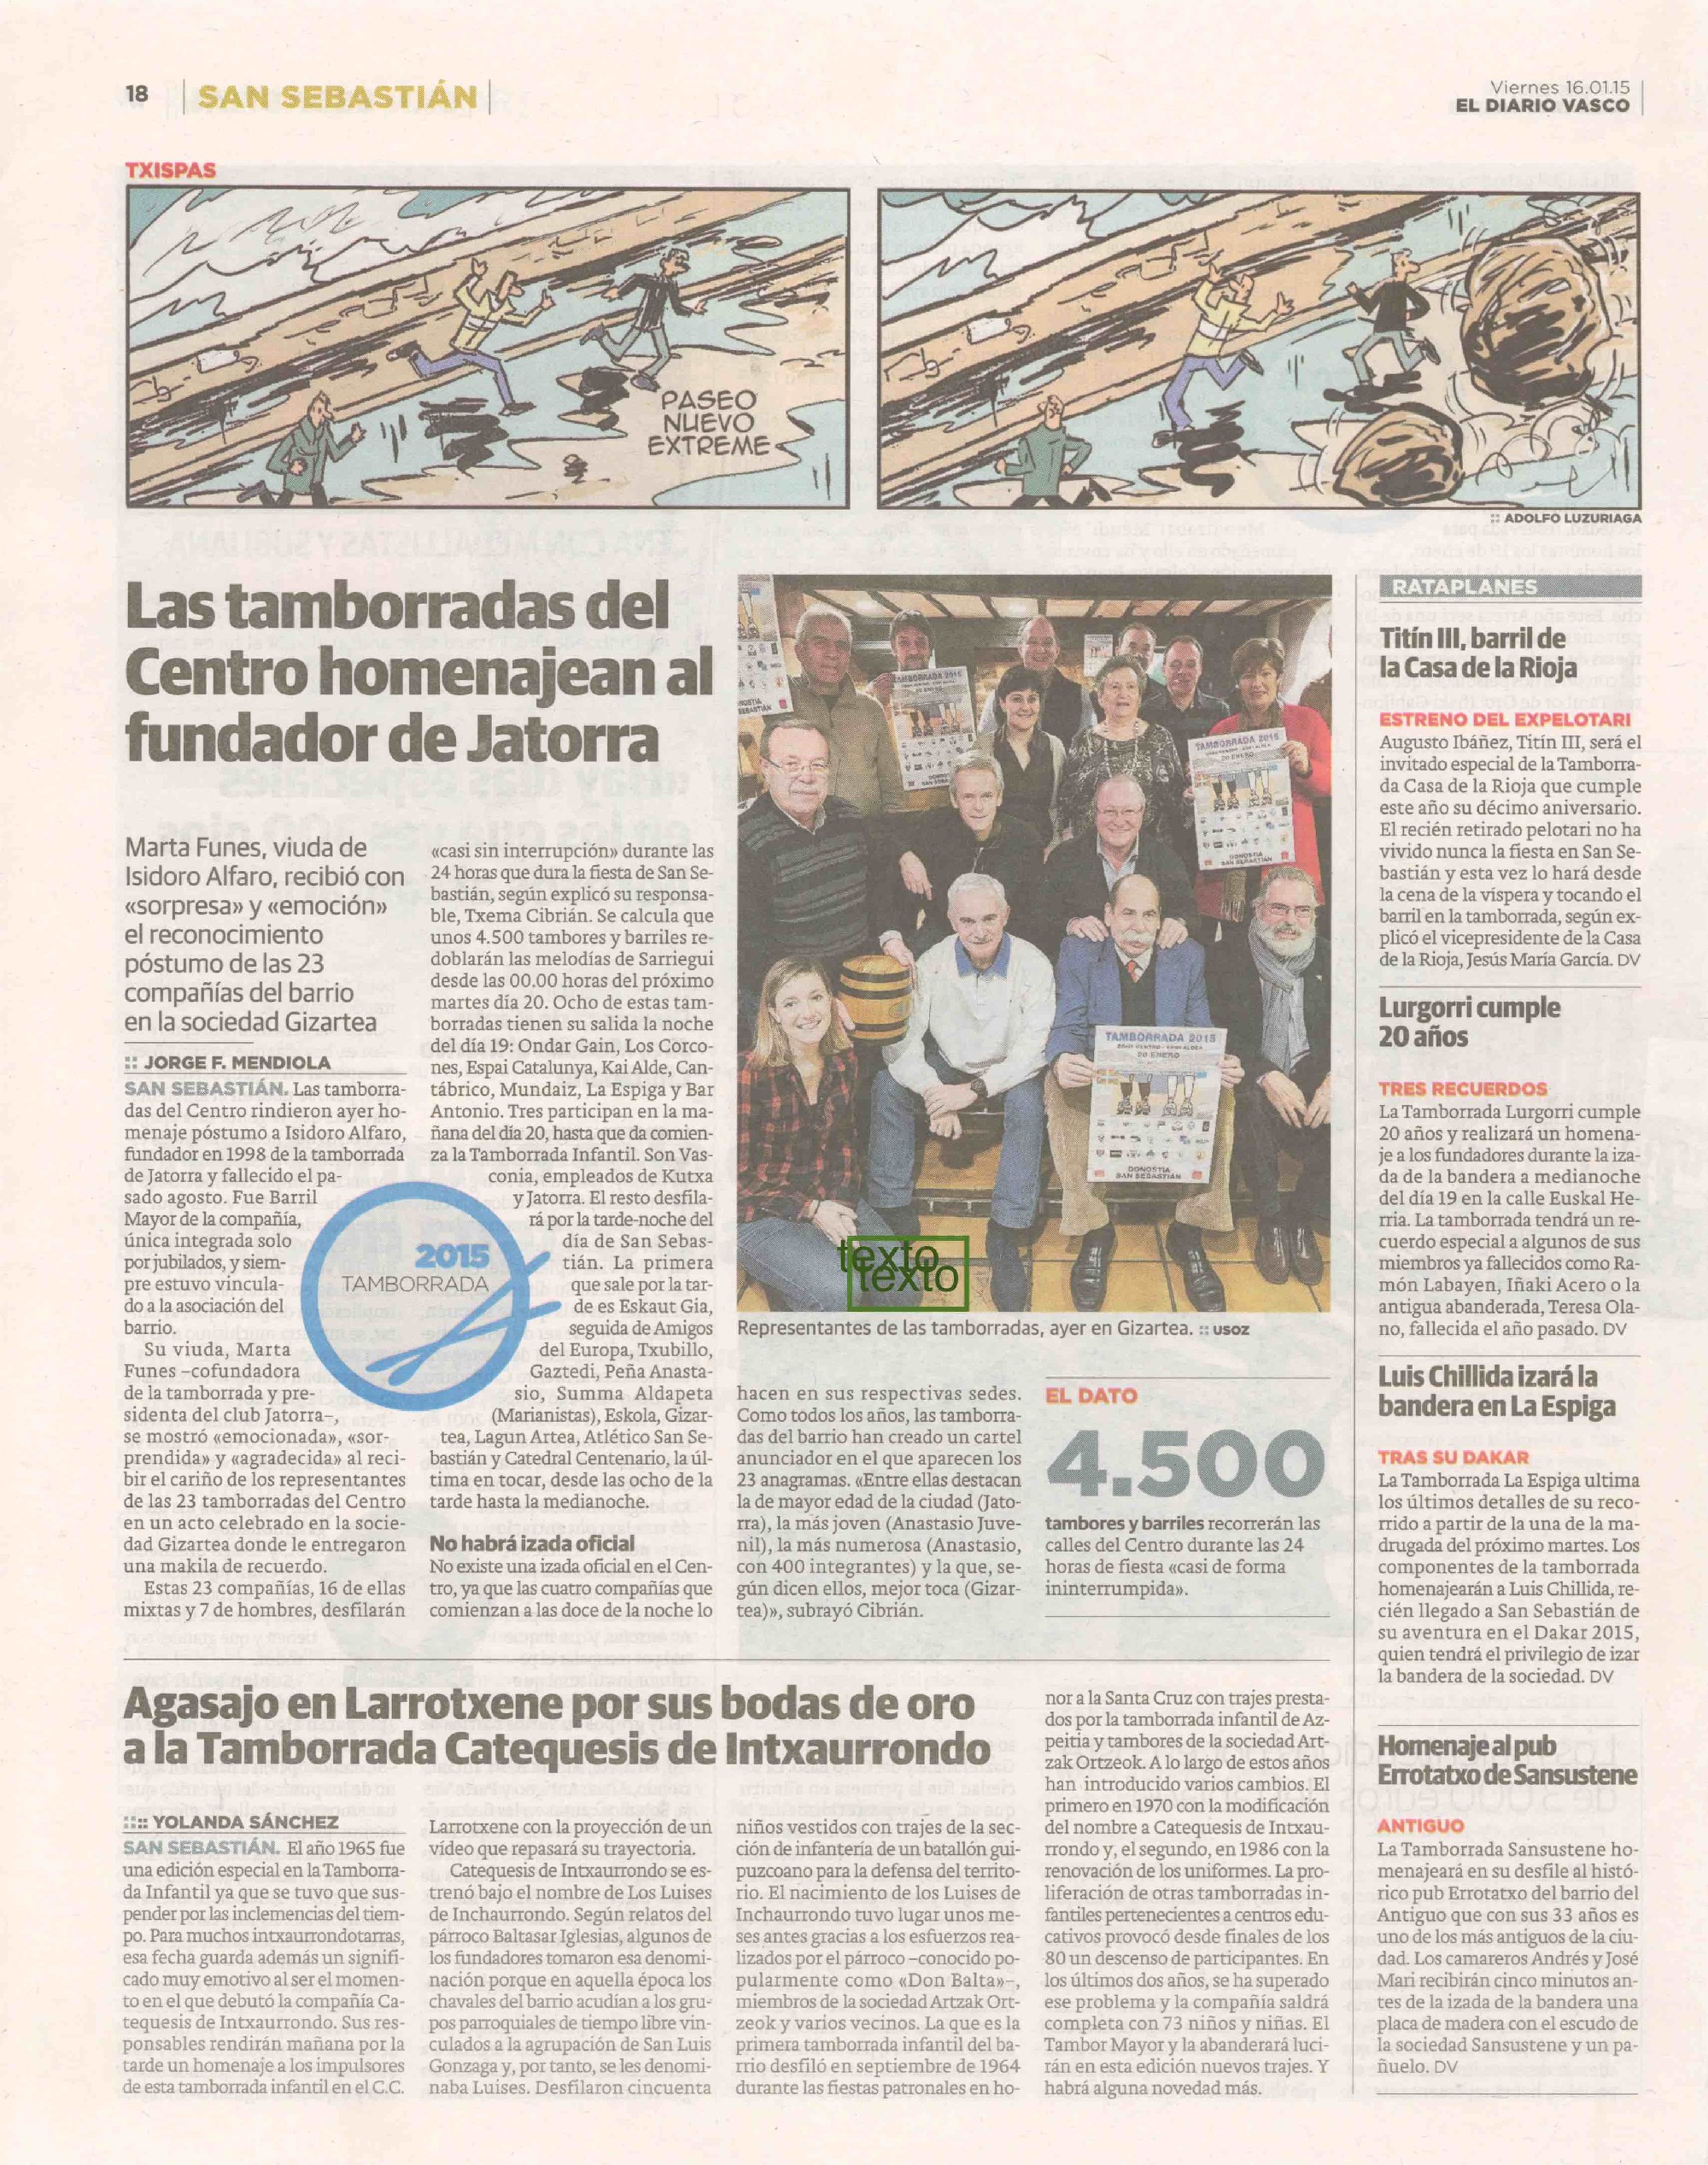 El Diario Vasco - 16 de enero de 2015